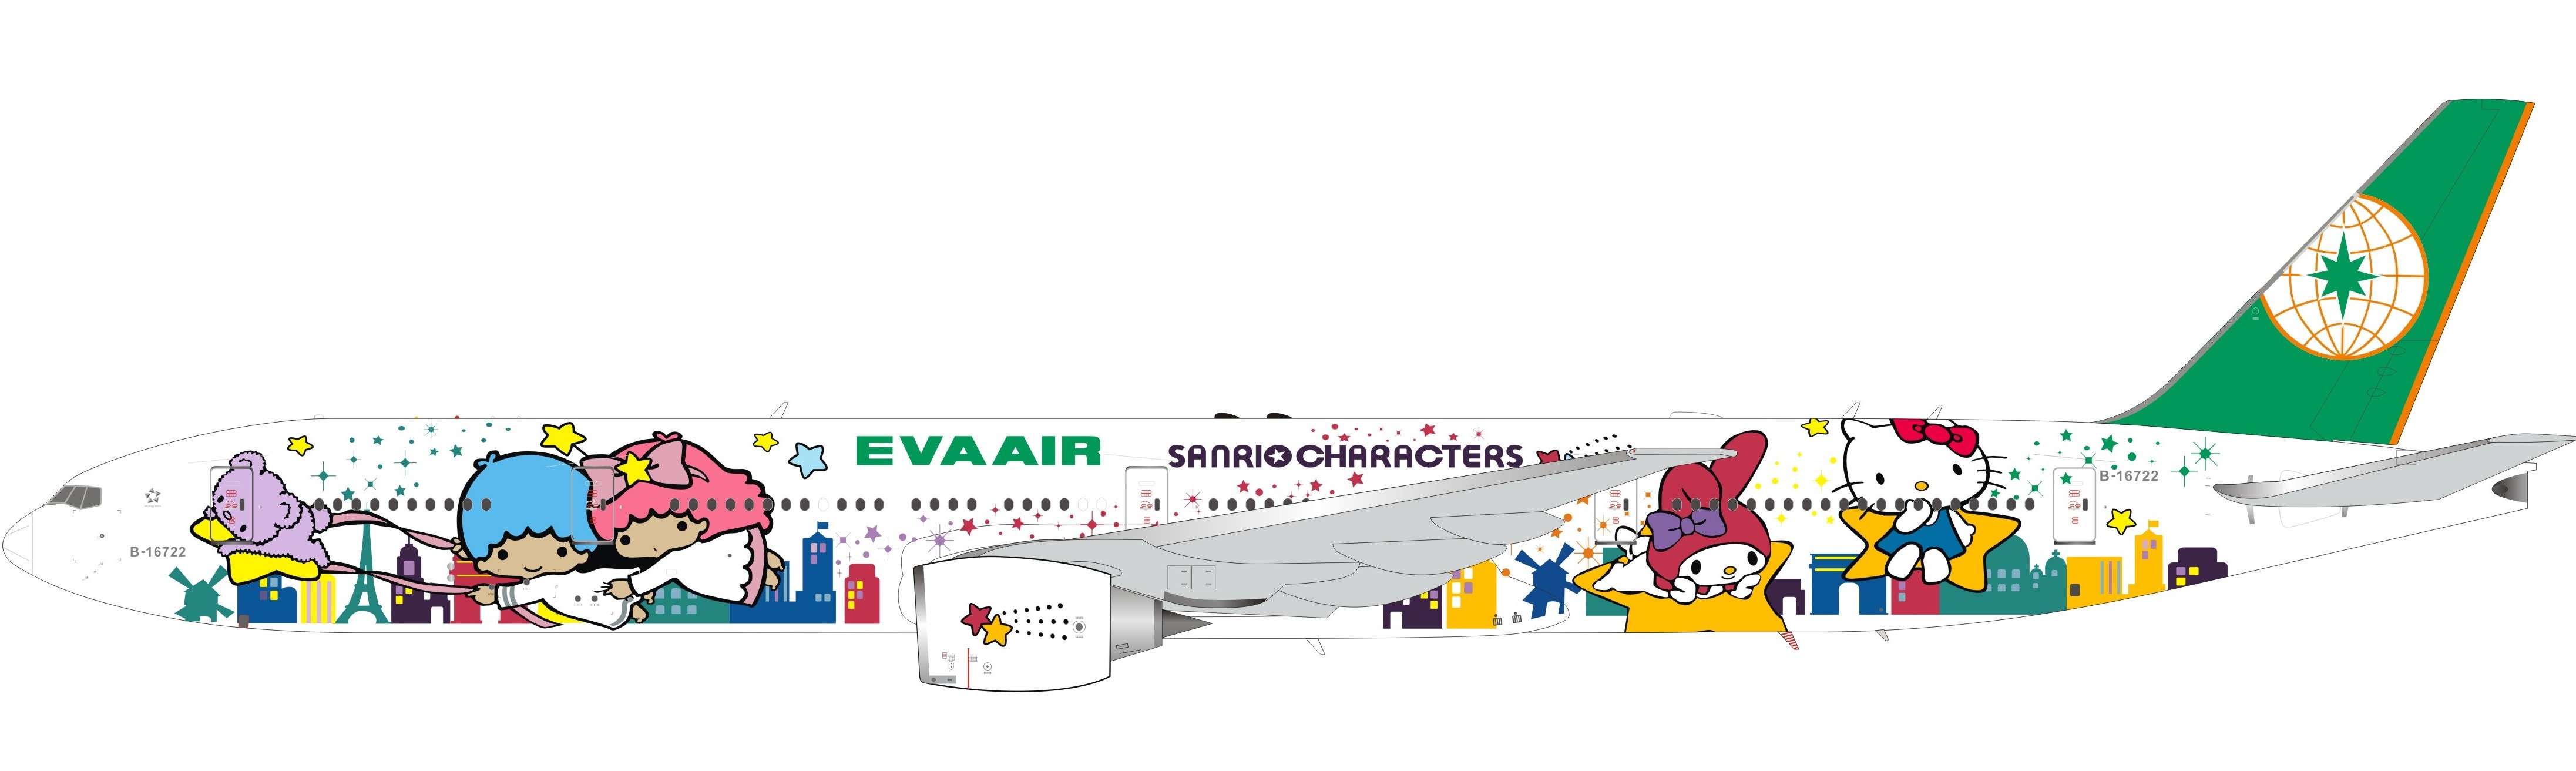 Sale! EVA Air Boeing 777-300ER Sanrio Characters B-16722 WB-777-6722 1:200